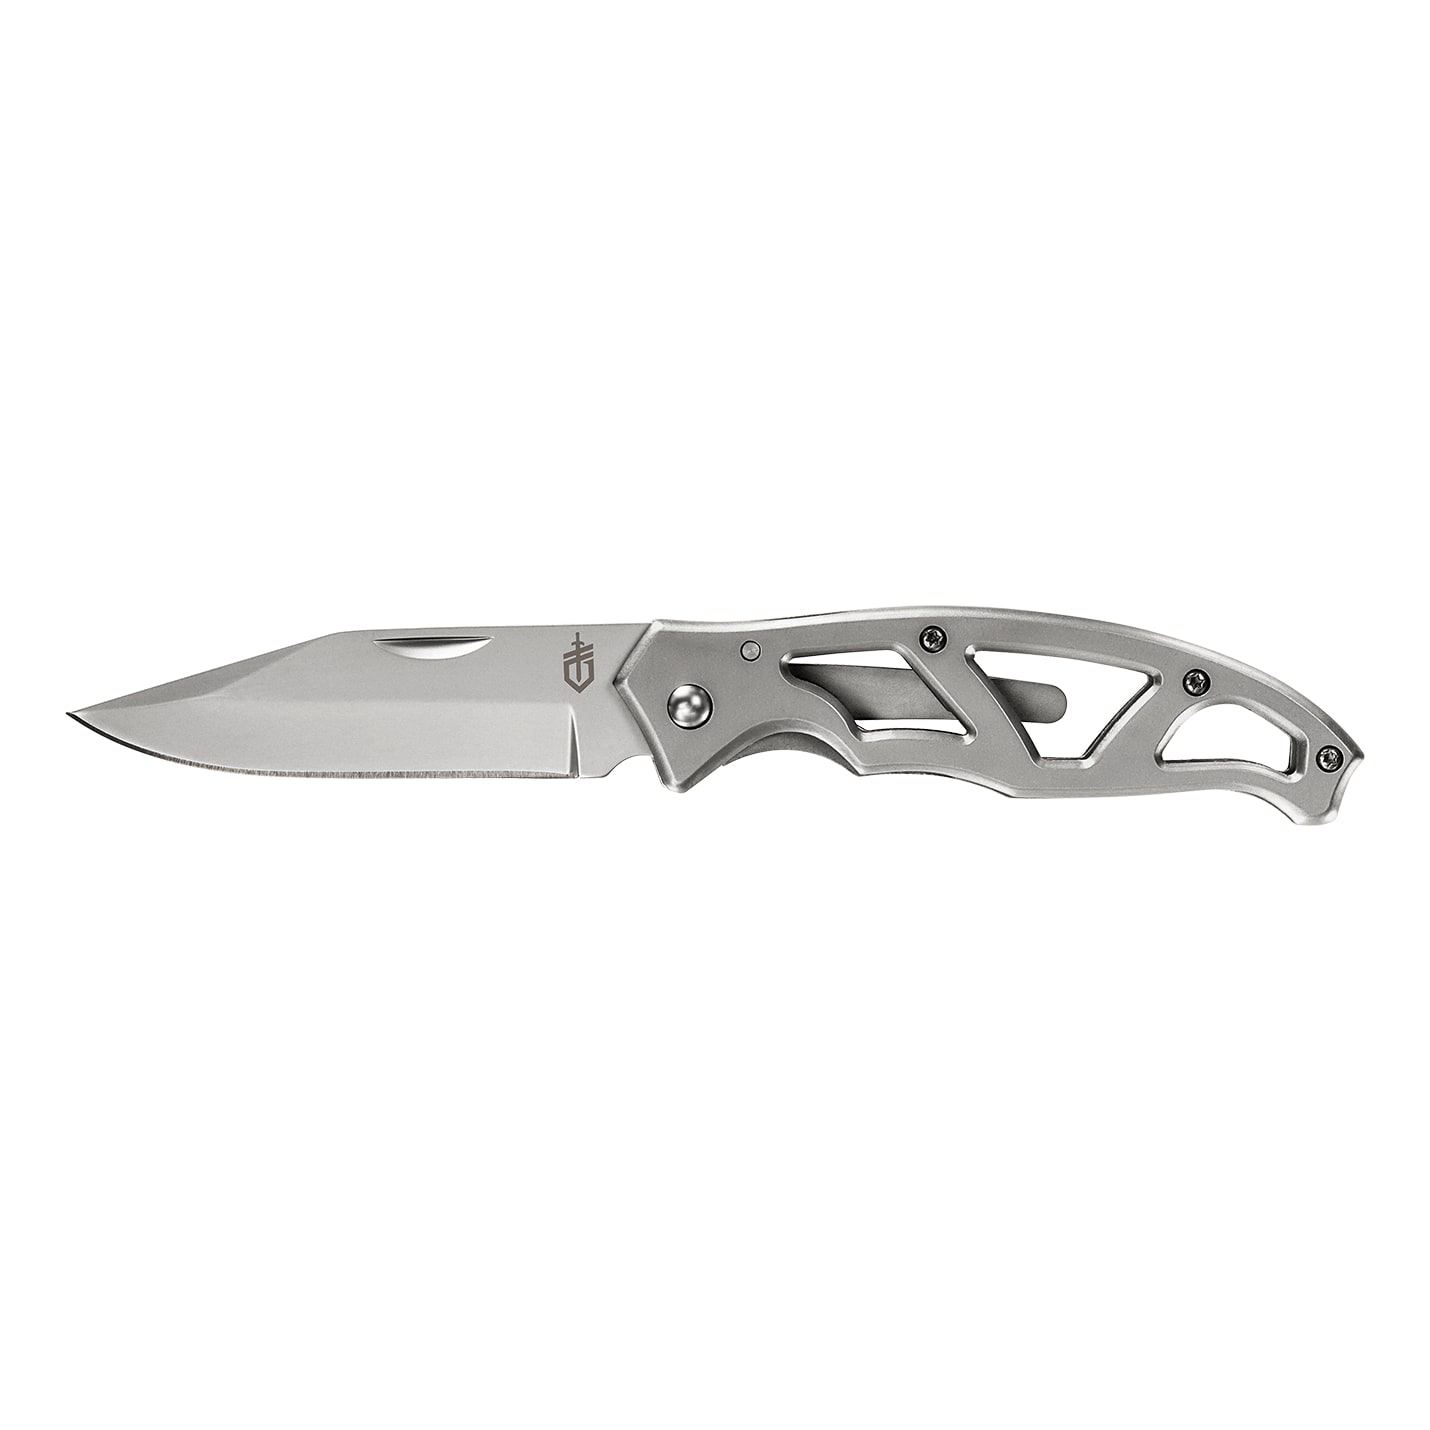 Gerber® Paraframe Folding Knife and Mullet Combo